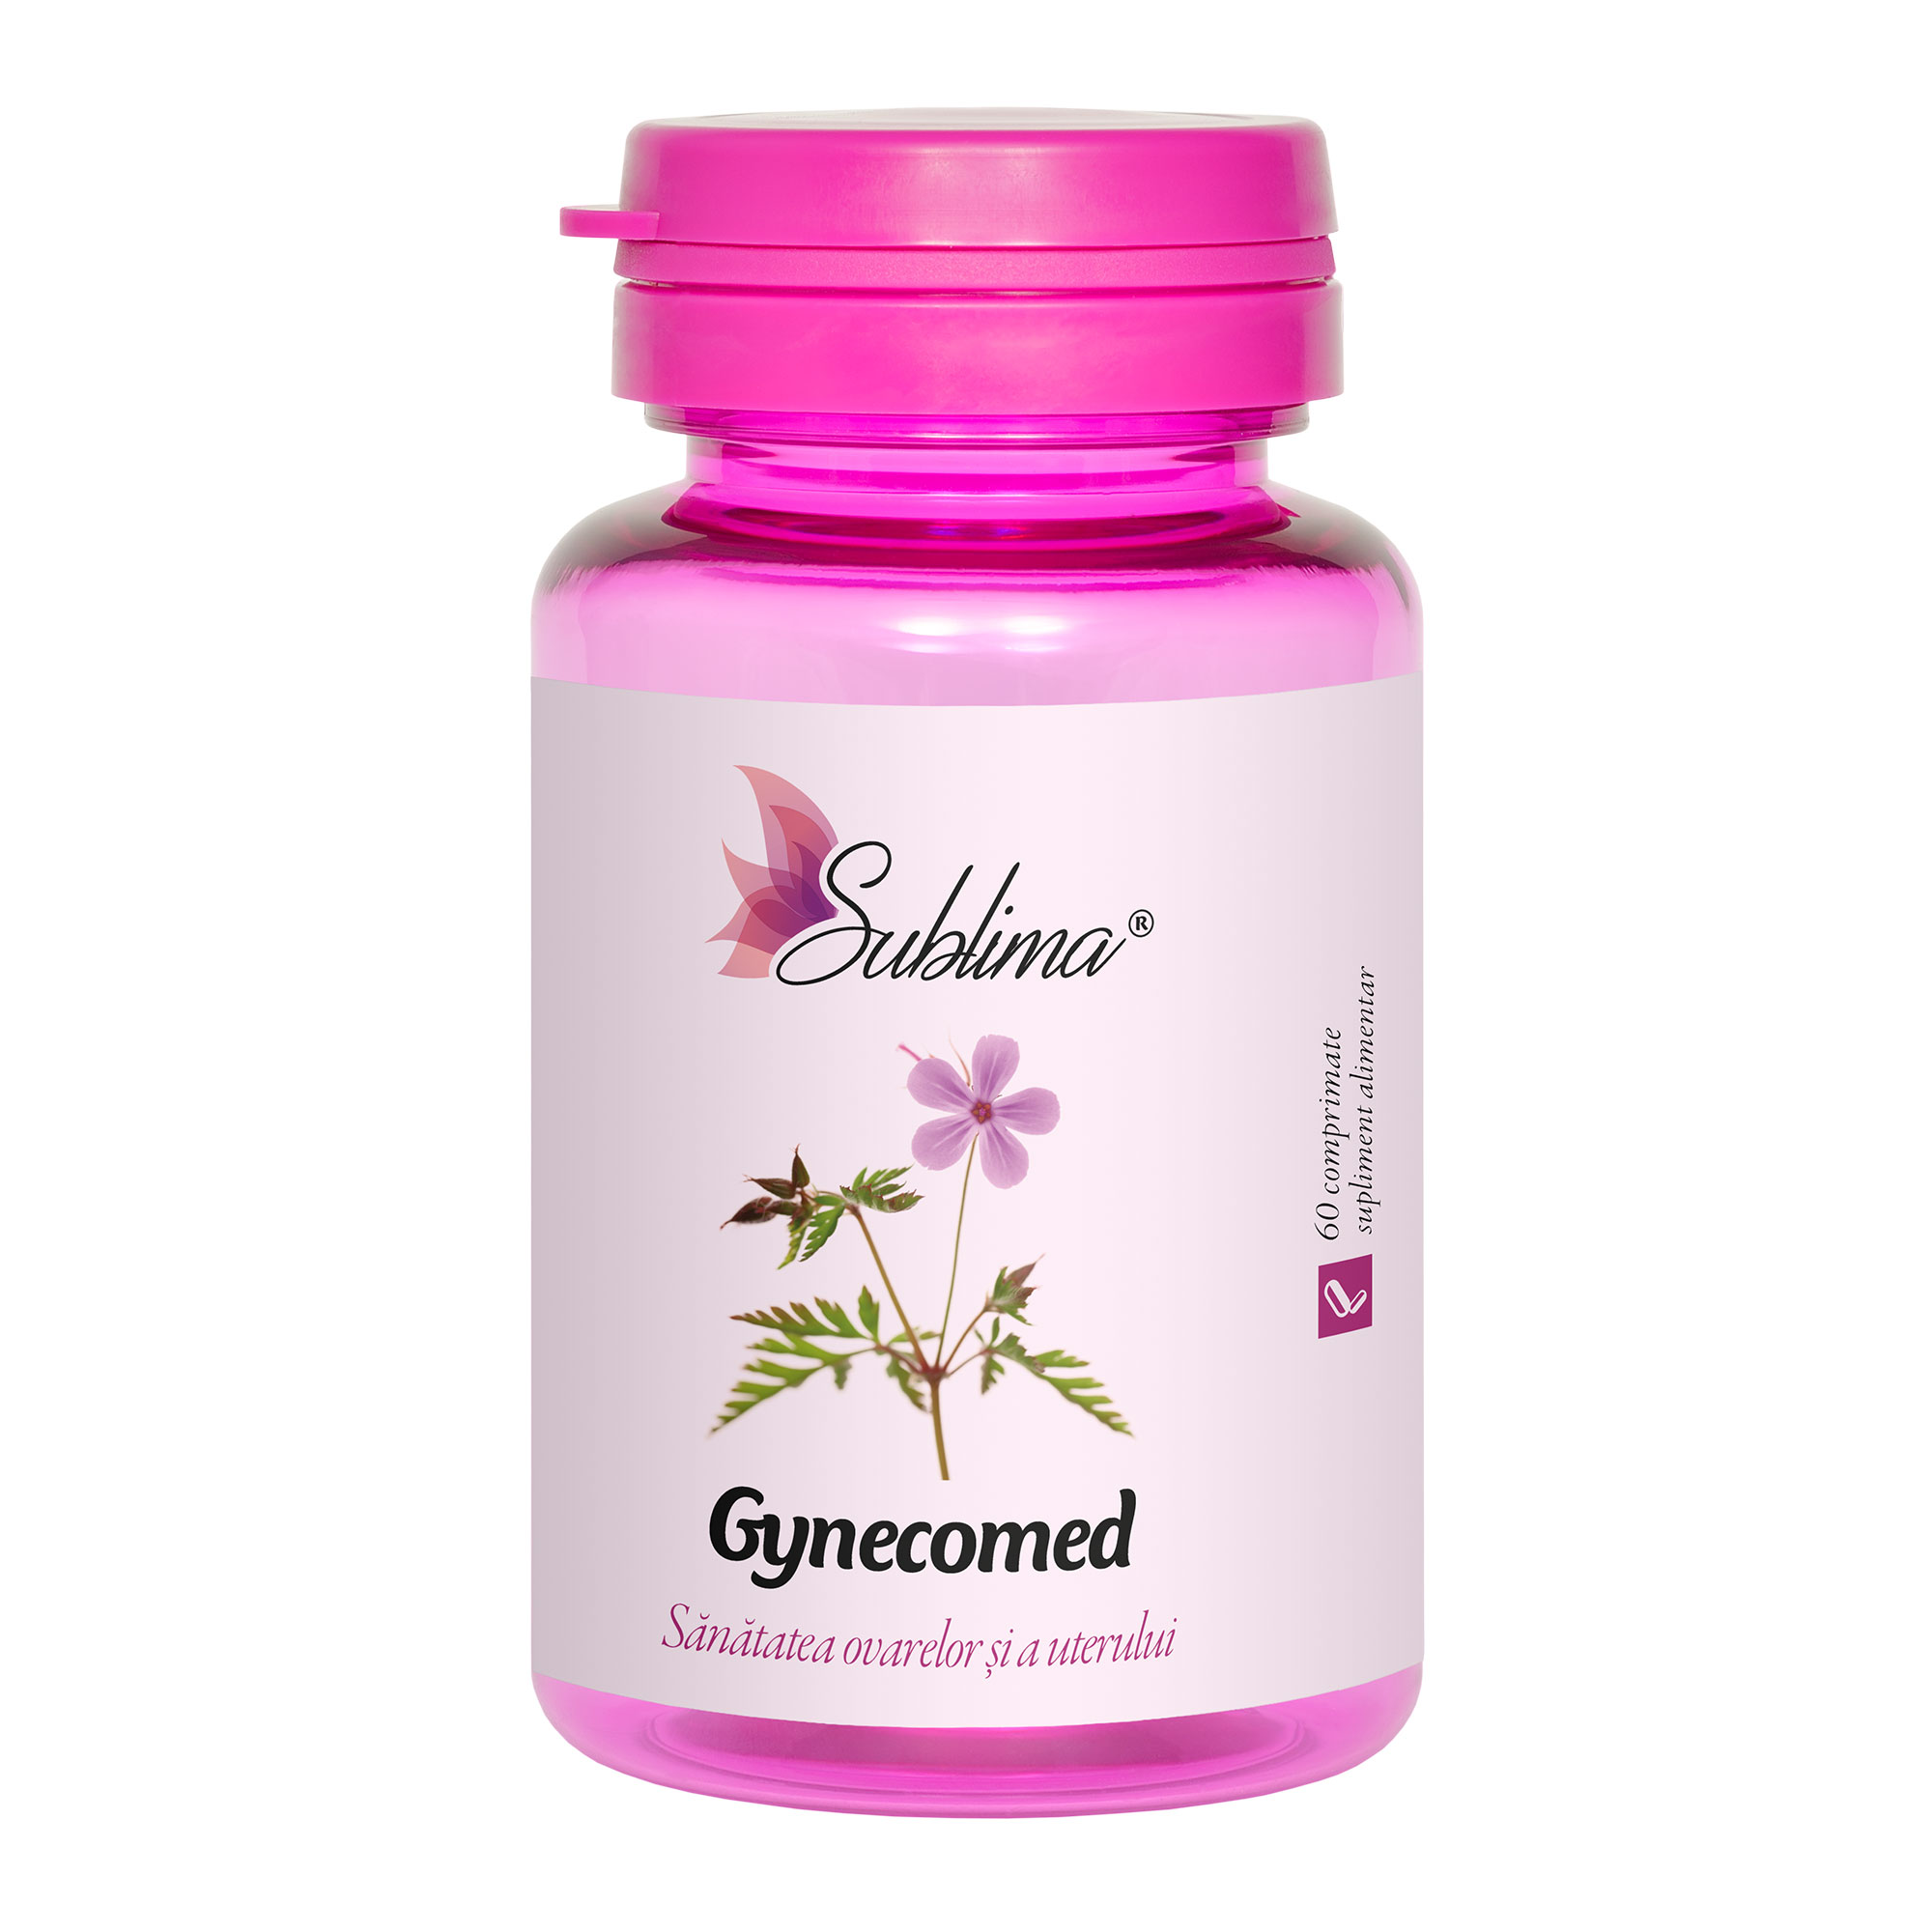 Sublima Gynecomed comprimate daciaplant.ro